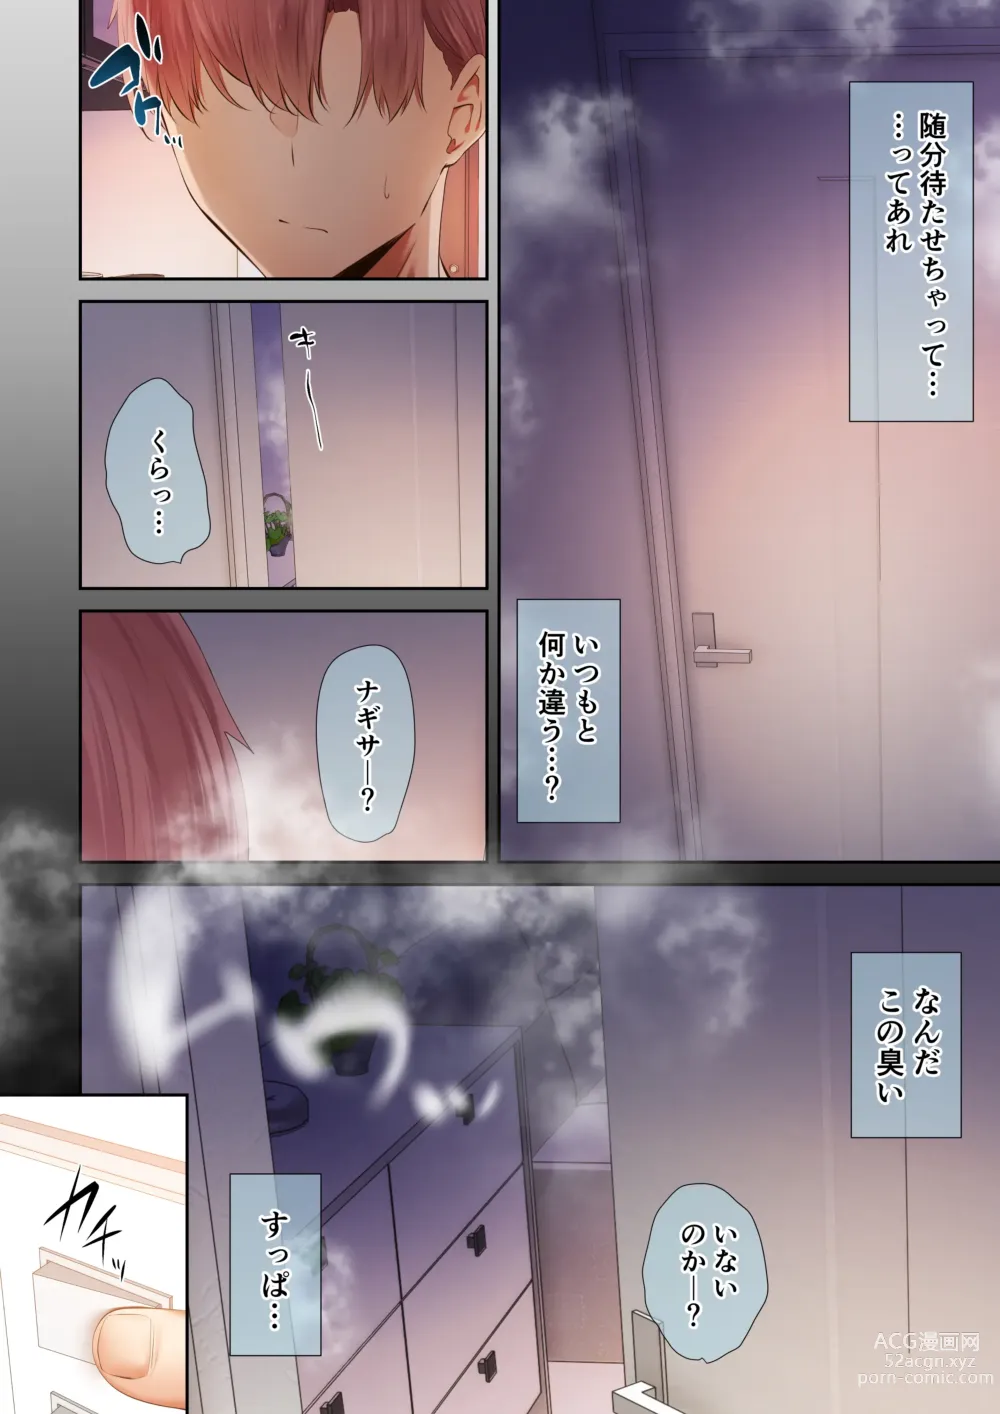 Page 96 of doujinshi 頼れる俺の大好きな先輩が、ヤリチンによってメスにさせられる話。